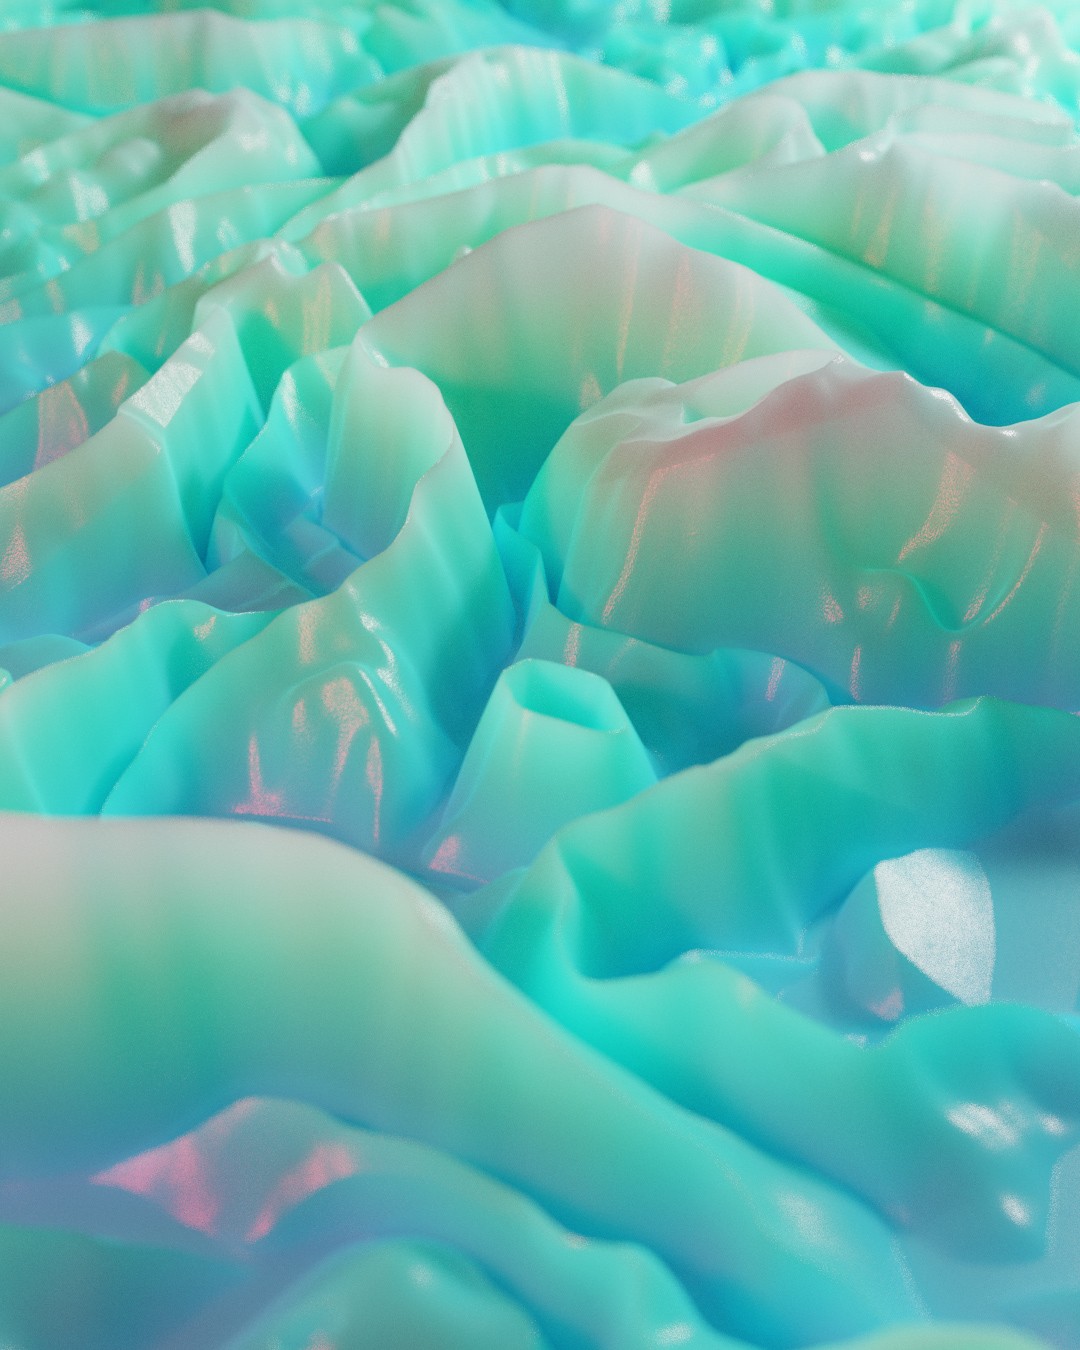 Colorful macro shot of terrain-like forms